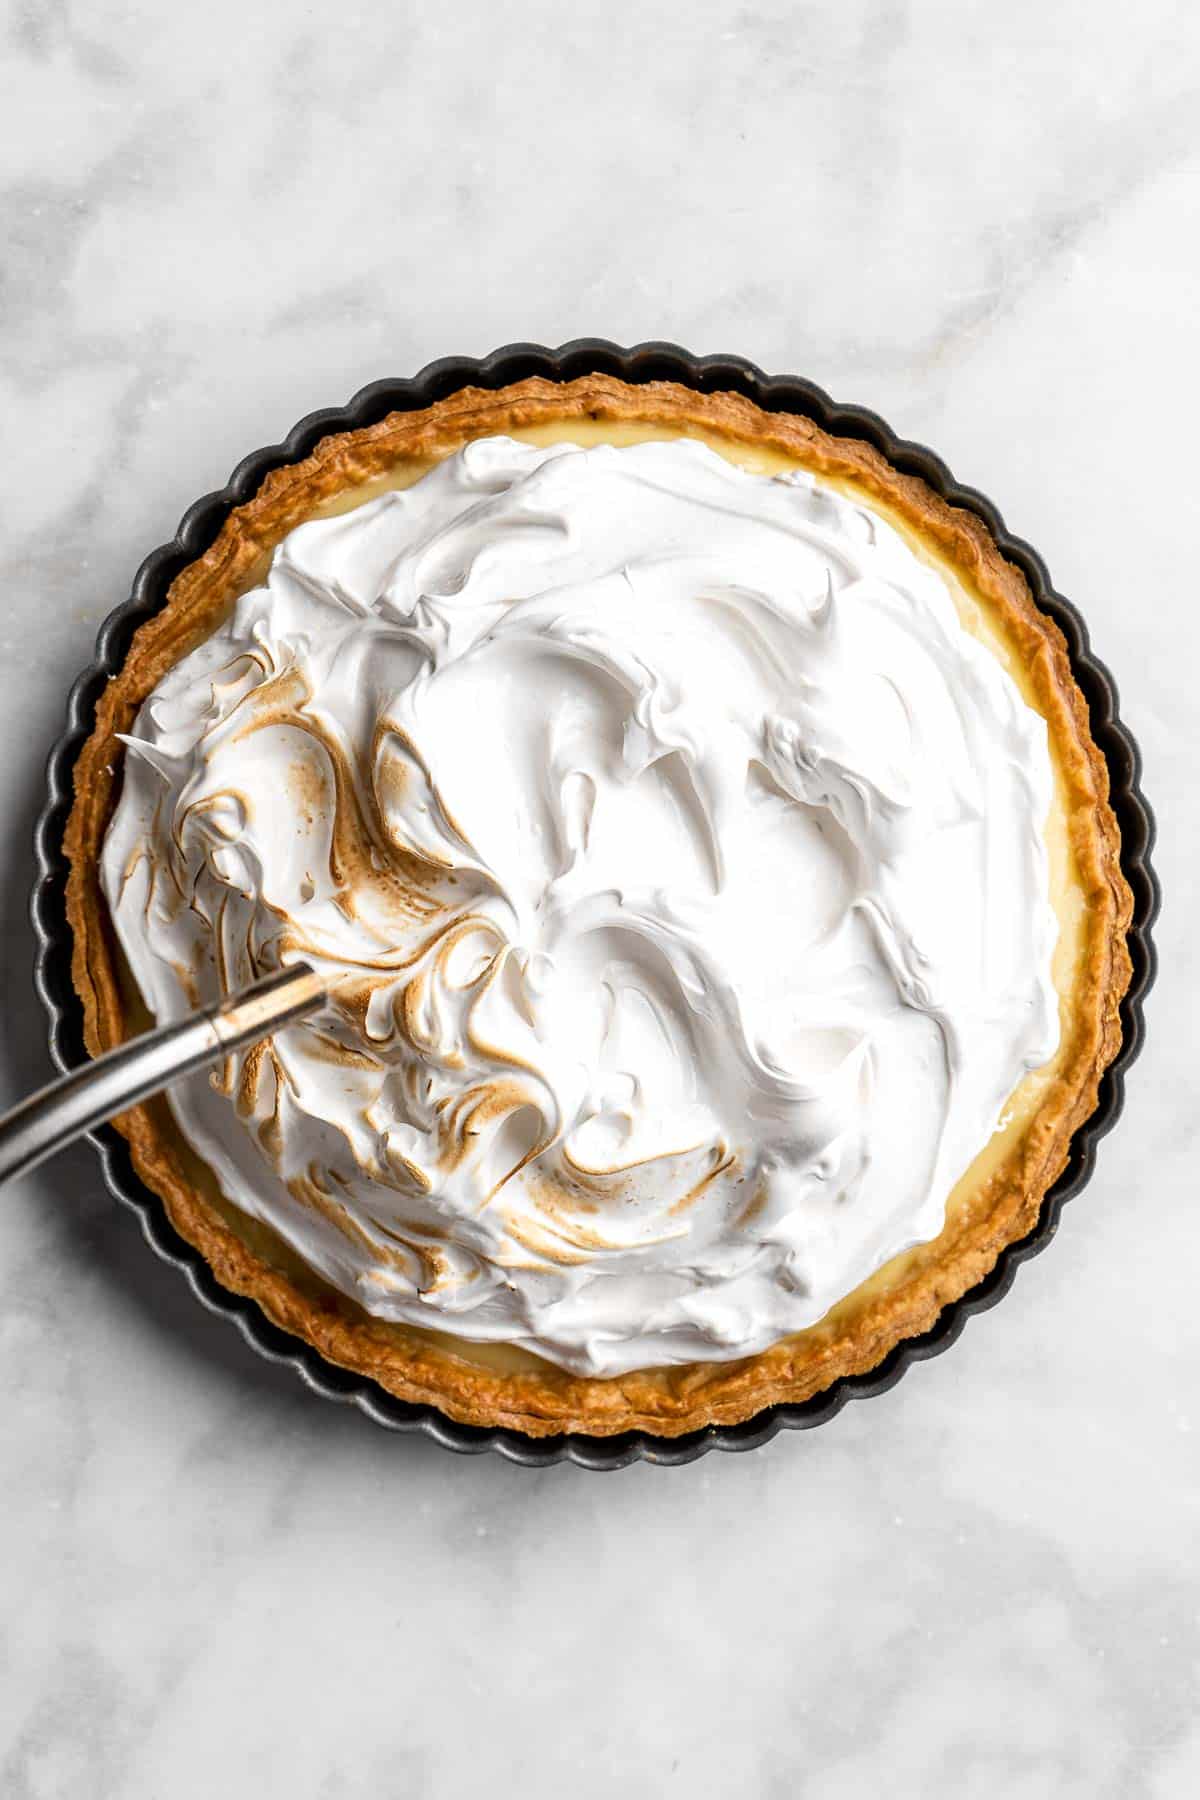 Lemon Meringue Pie made with delicate peaks of golden-brown meringue, creamy and tart lemon curd filling, and flaky pie crust is the best homemade pie ever! | aheadofthyme.com